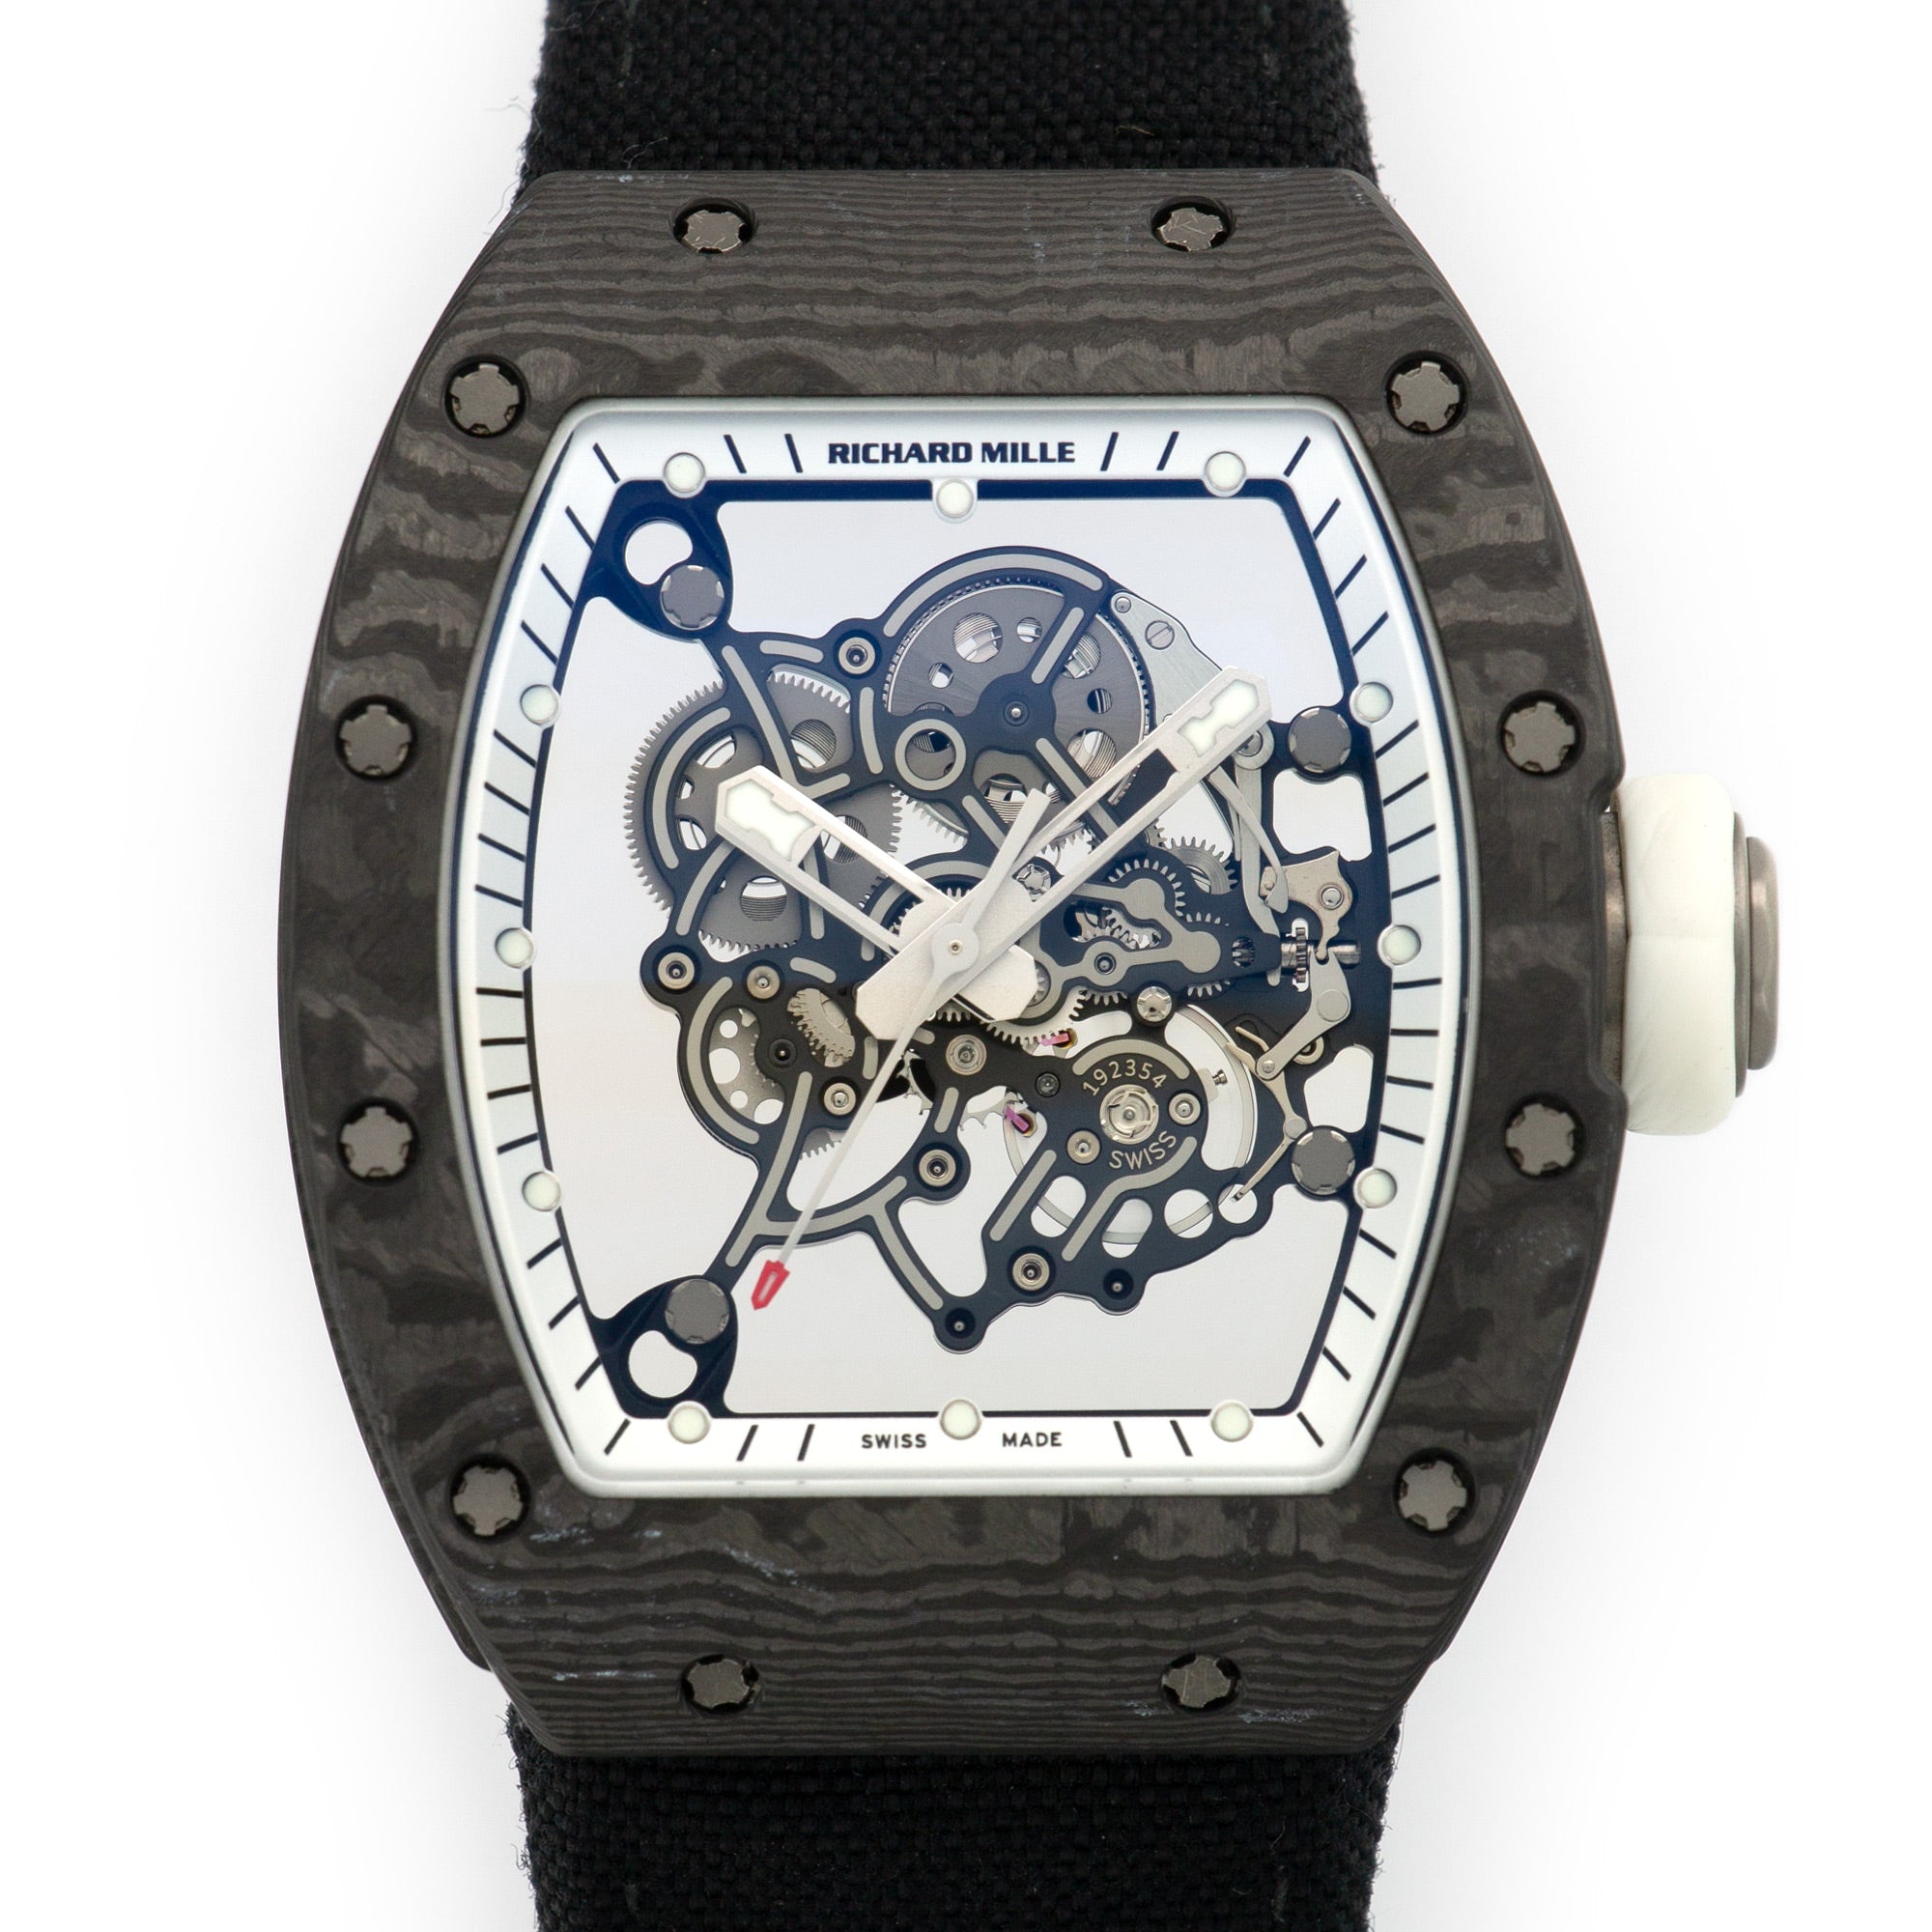 Richard Mille - Richard Mille Carbon Fiber Skeleton White Legend Watch Ref. RM055 RM55 - The Keystone Watches